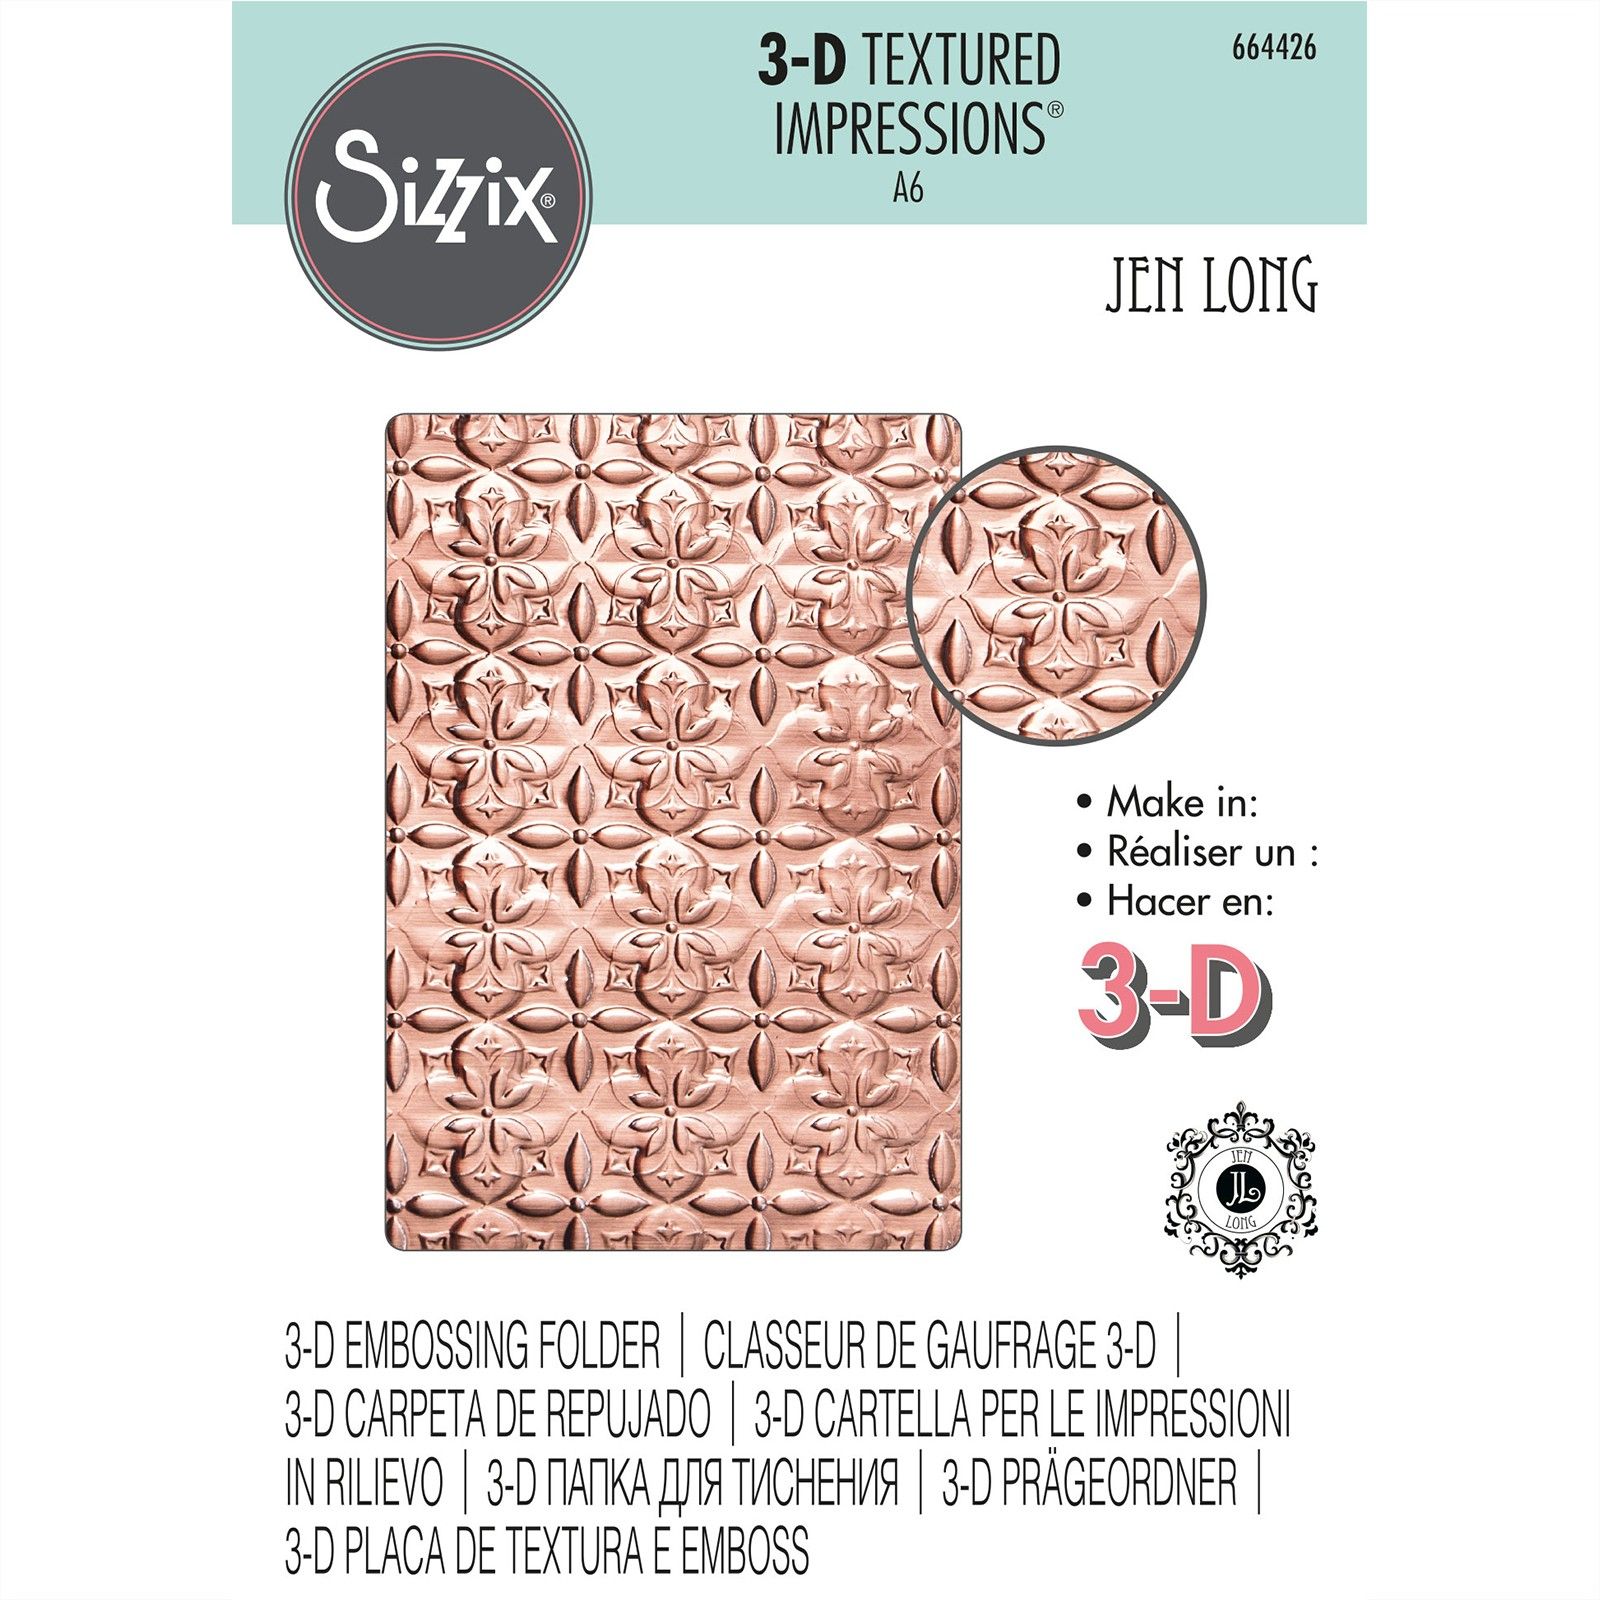 Sizzix 3D Textured Impressions Embossing Folder by Jen Long - Adorned Tile